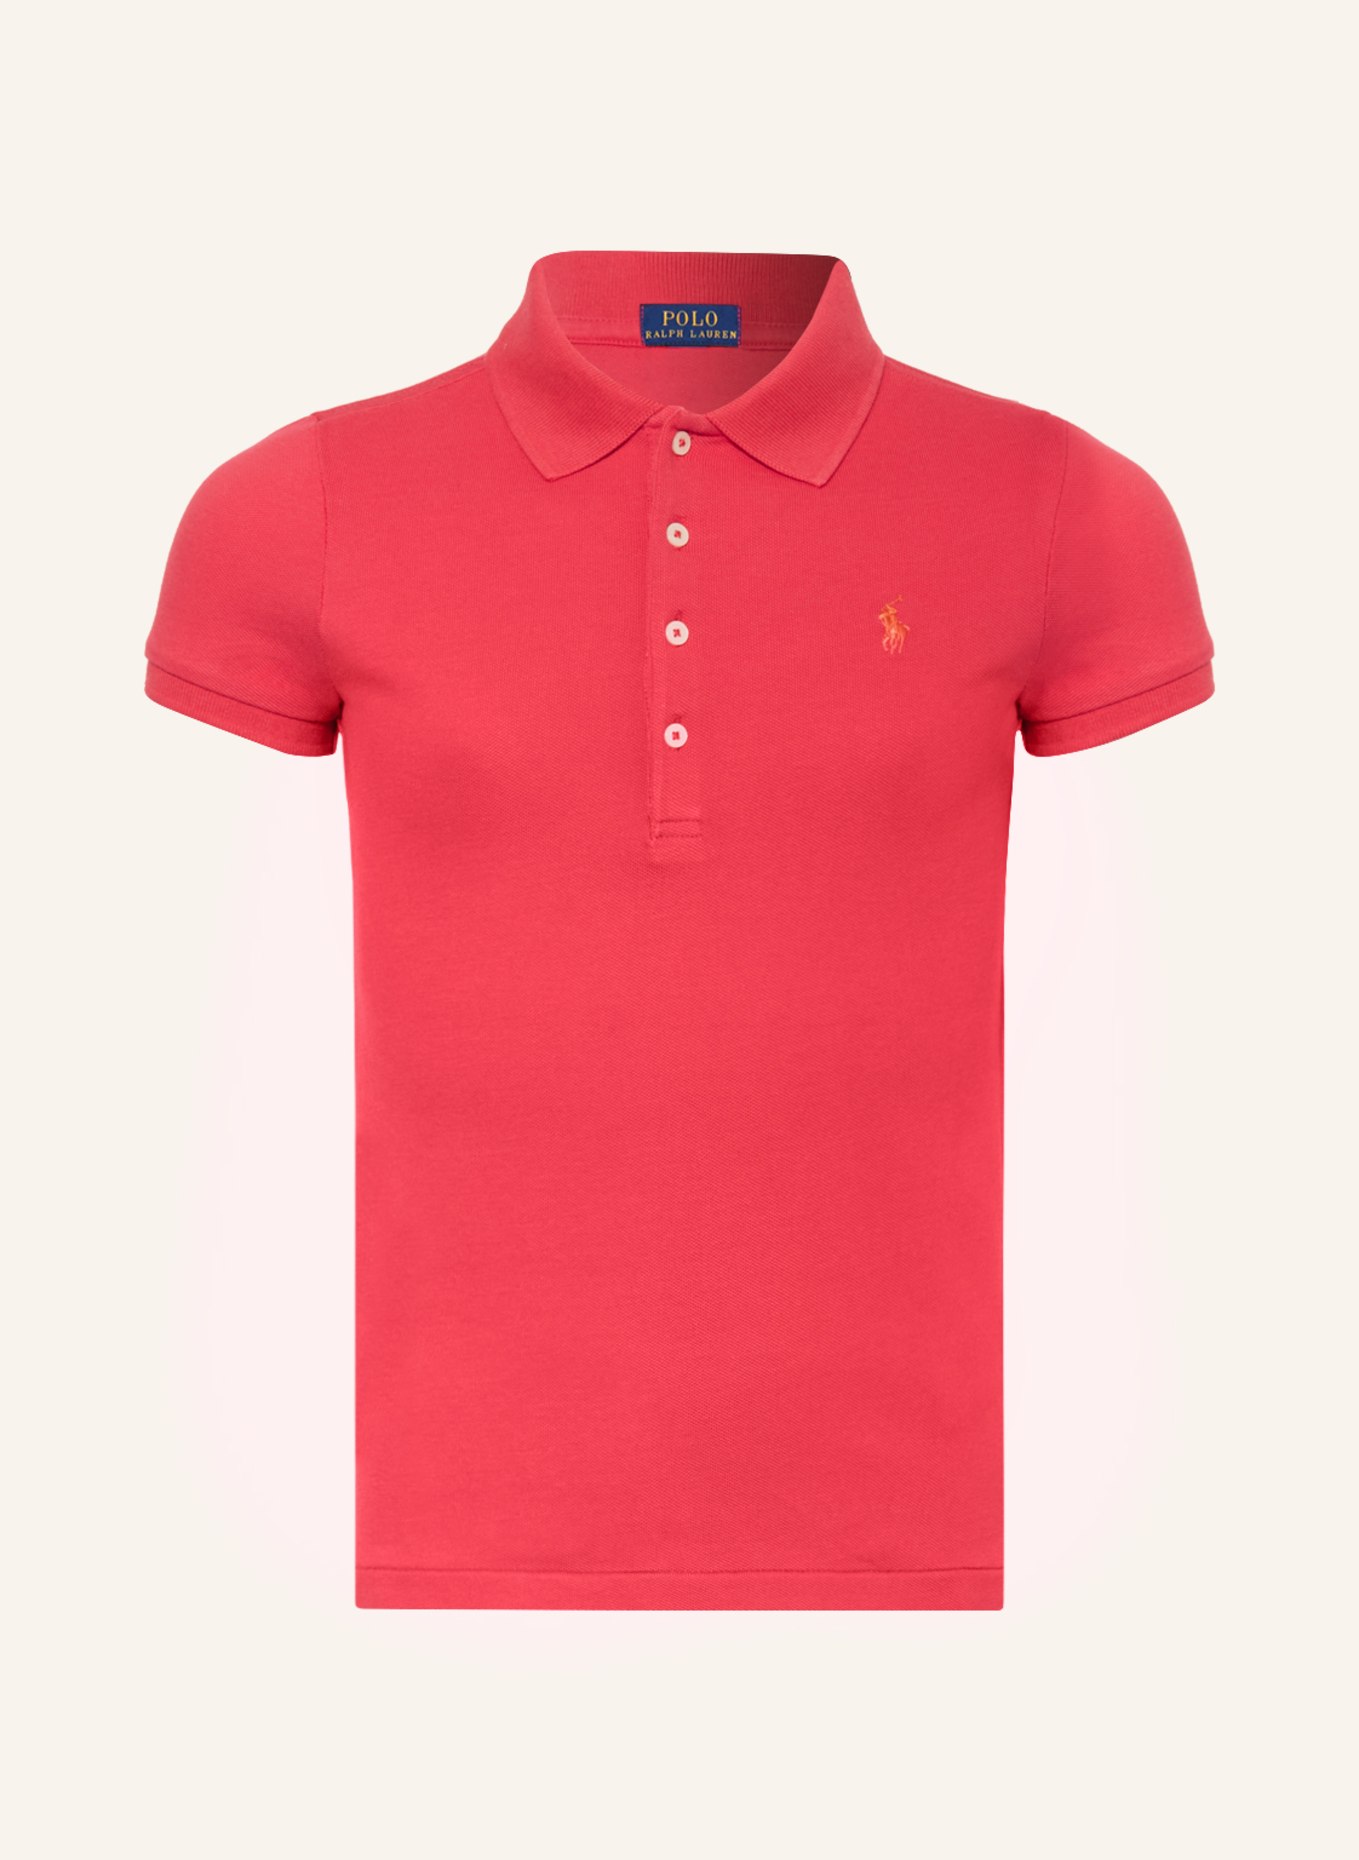 POLO RALPH LAUREN Piqué-Poloshirt, Farbe: PINK (Bild 1)